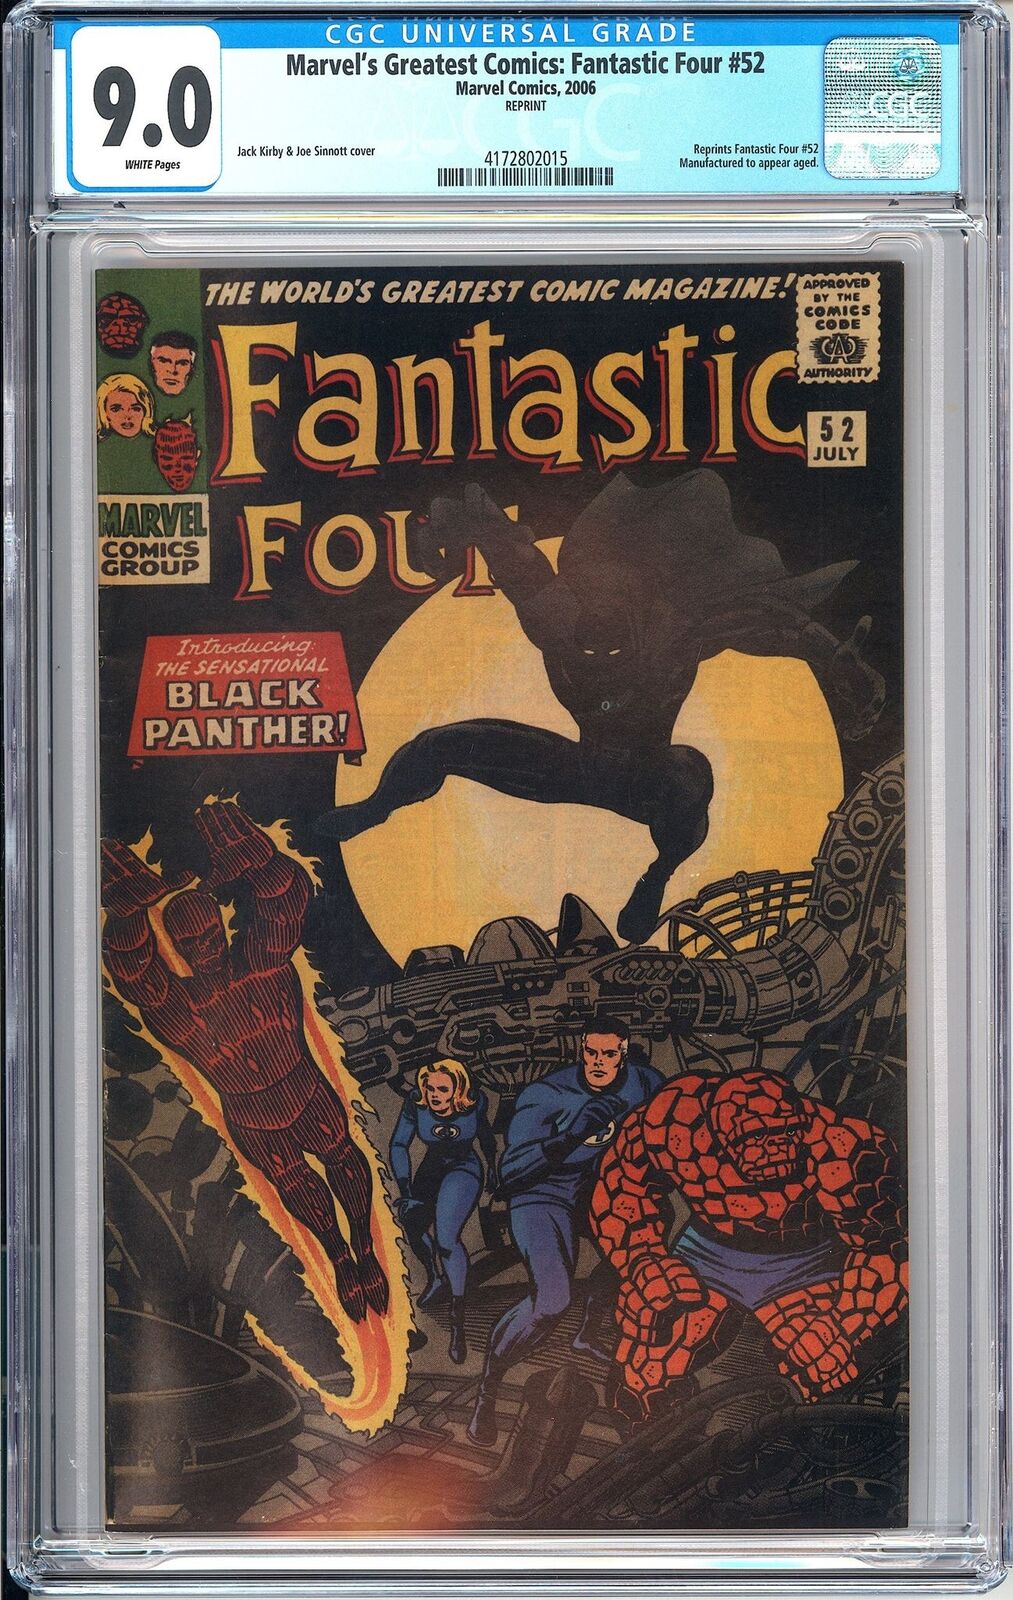 Marvel's Greatest Comics: Fantastic Four 52 CGC 9.0 4172802015 REPRINT 1st Black